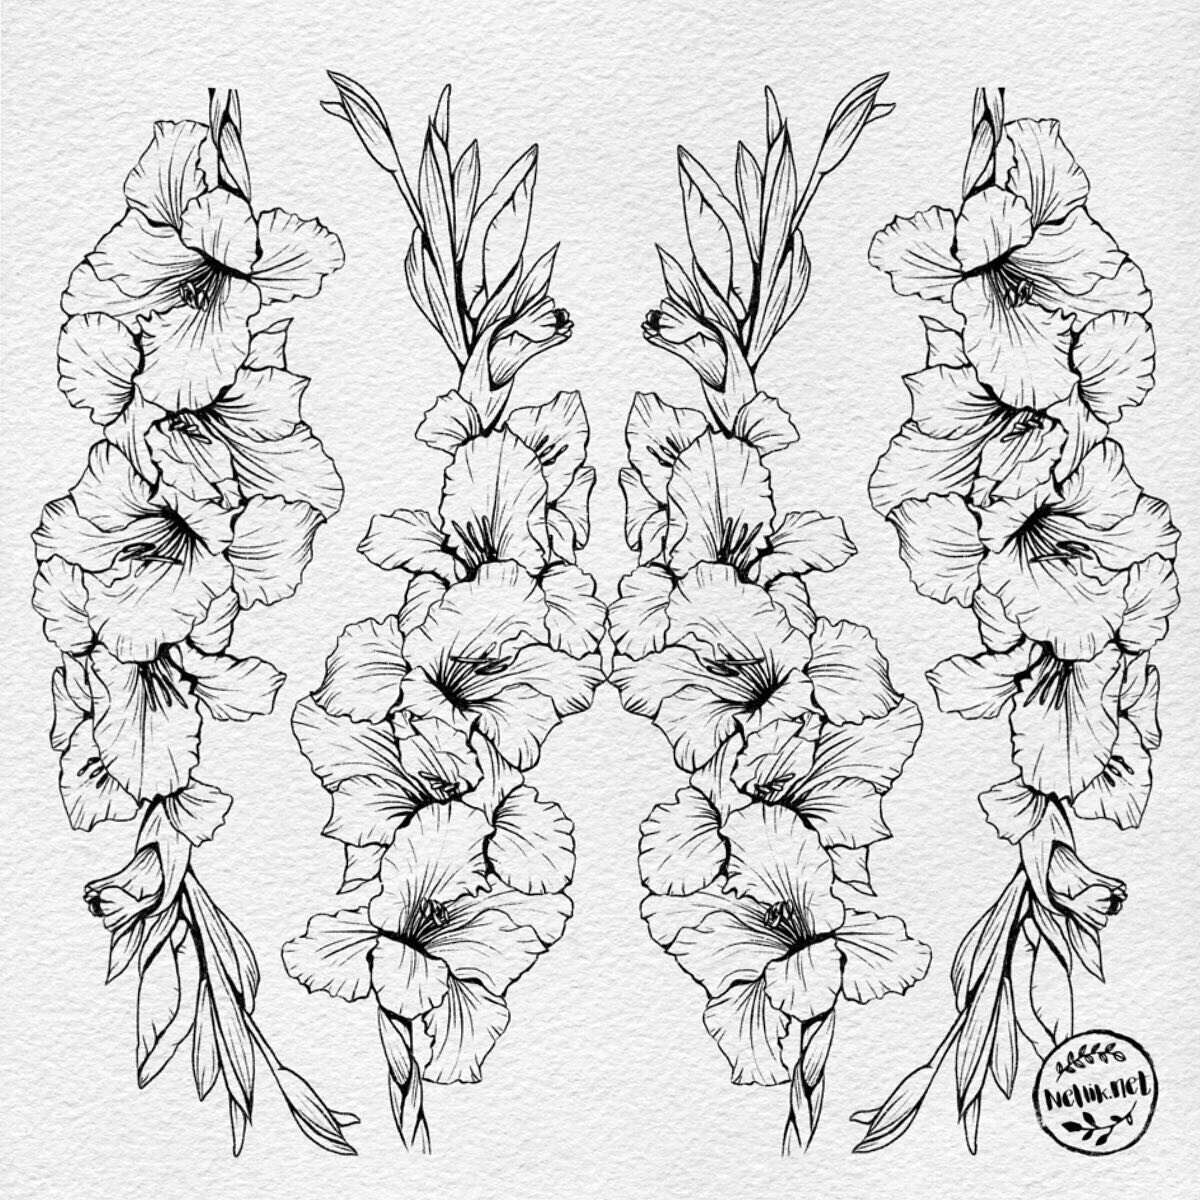 Month of Flowers Challenge by @kirstenkatzart 
. 
Day 7 - #gladiolus 
.
.
.
#flowermonth2022 
#paintedflowers
#dailypainting 
#greetingcarddesign
#Nellik
#artlicensing
#ArtLicensingShow
#artforlicensing
#surfacedesign
#ArtLicensing
#artforproducts
#a